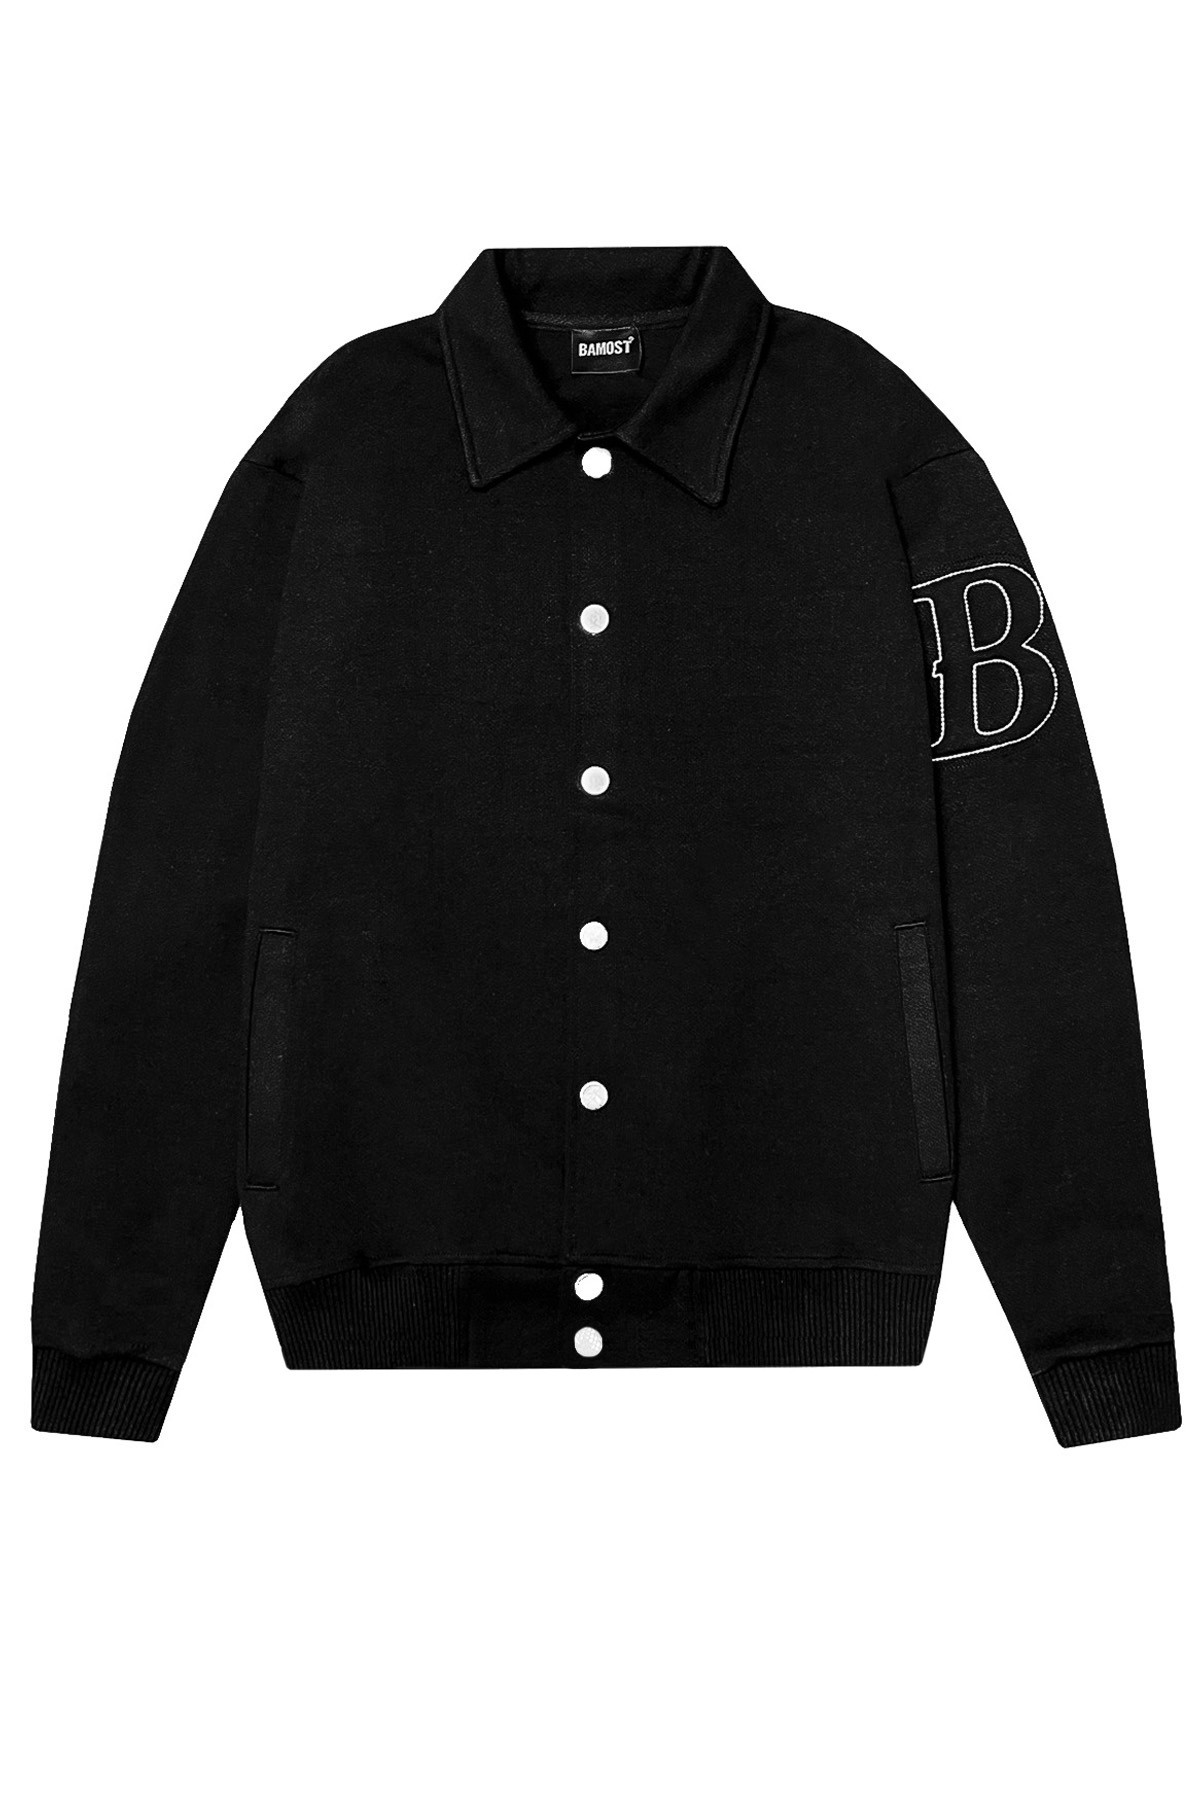 Aris - College Jacket - BLACK